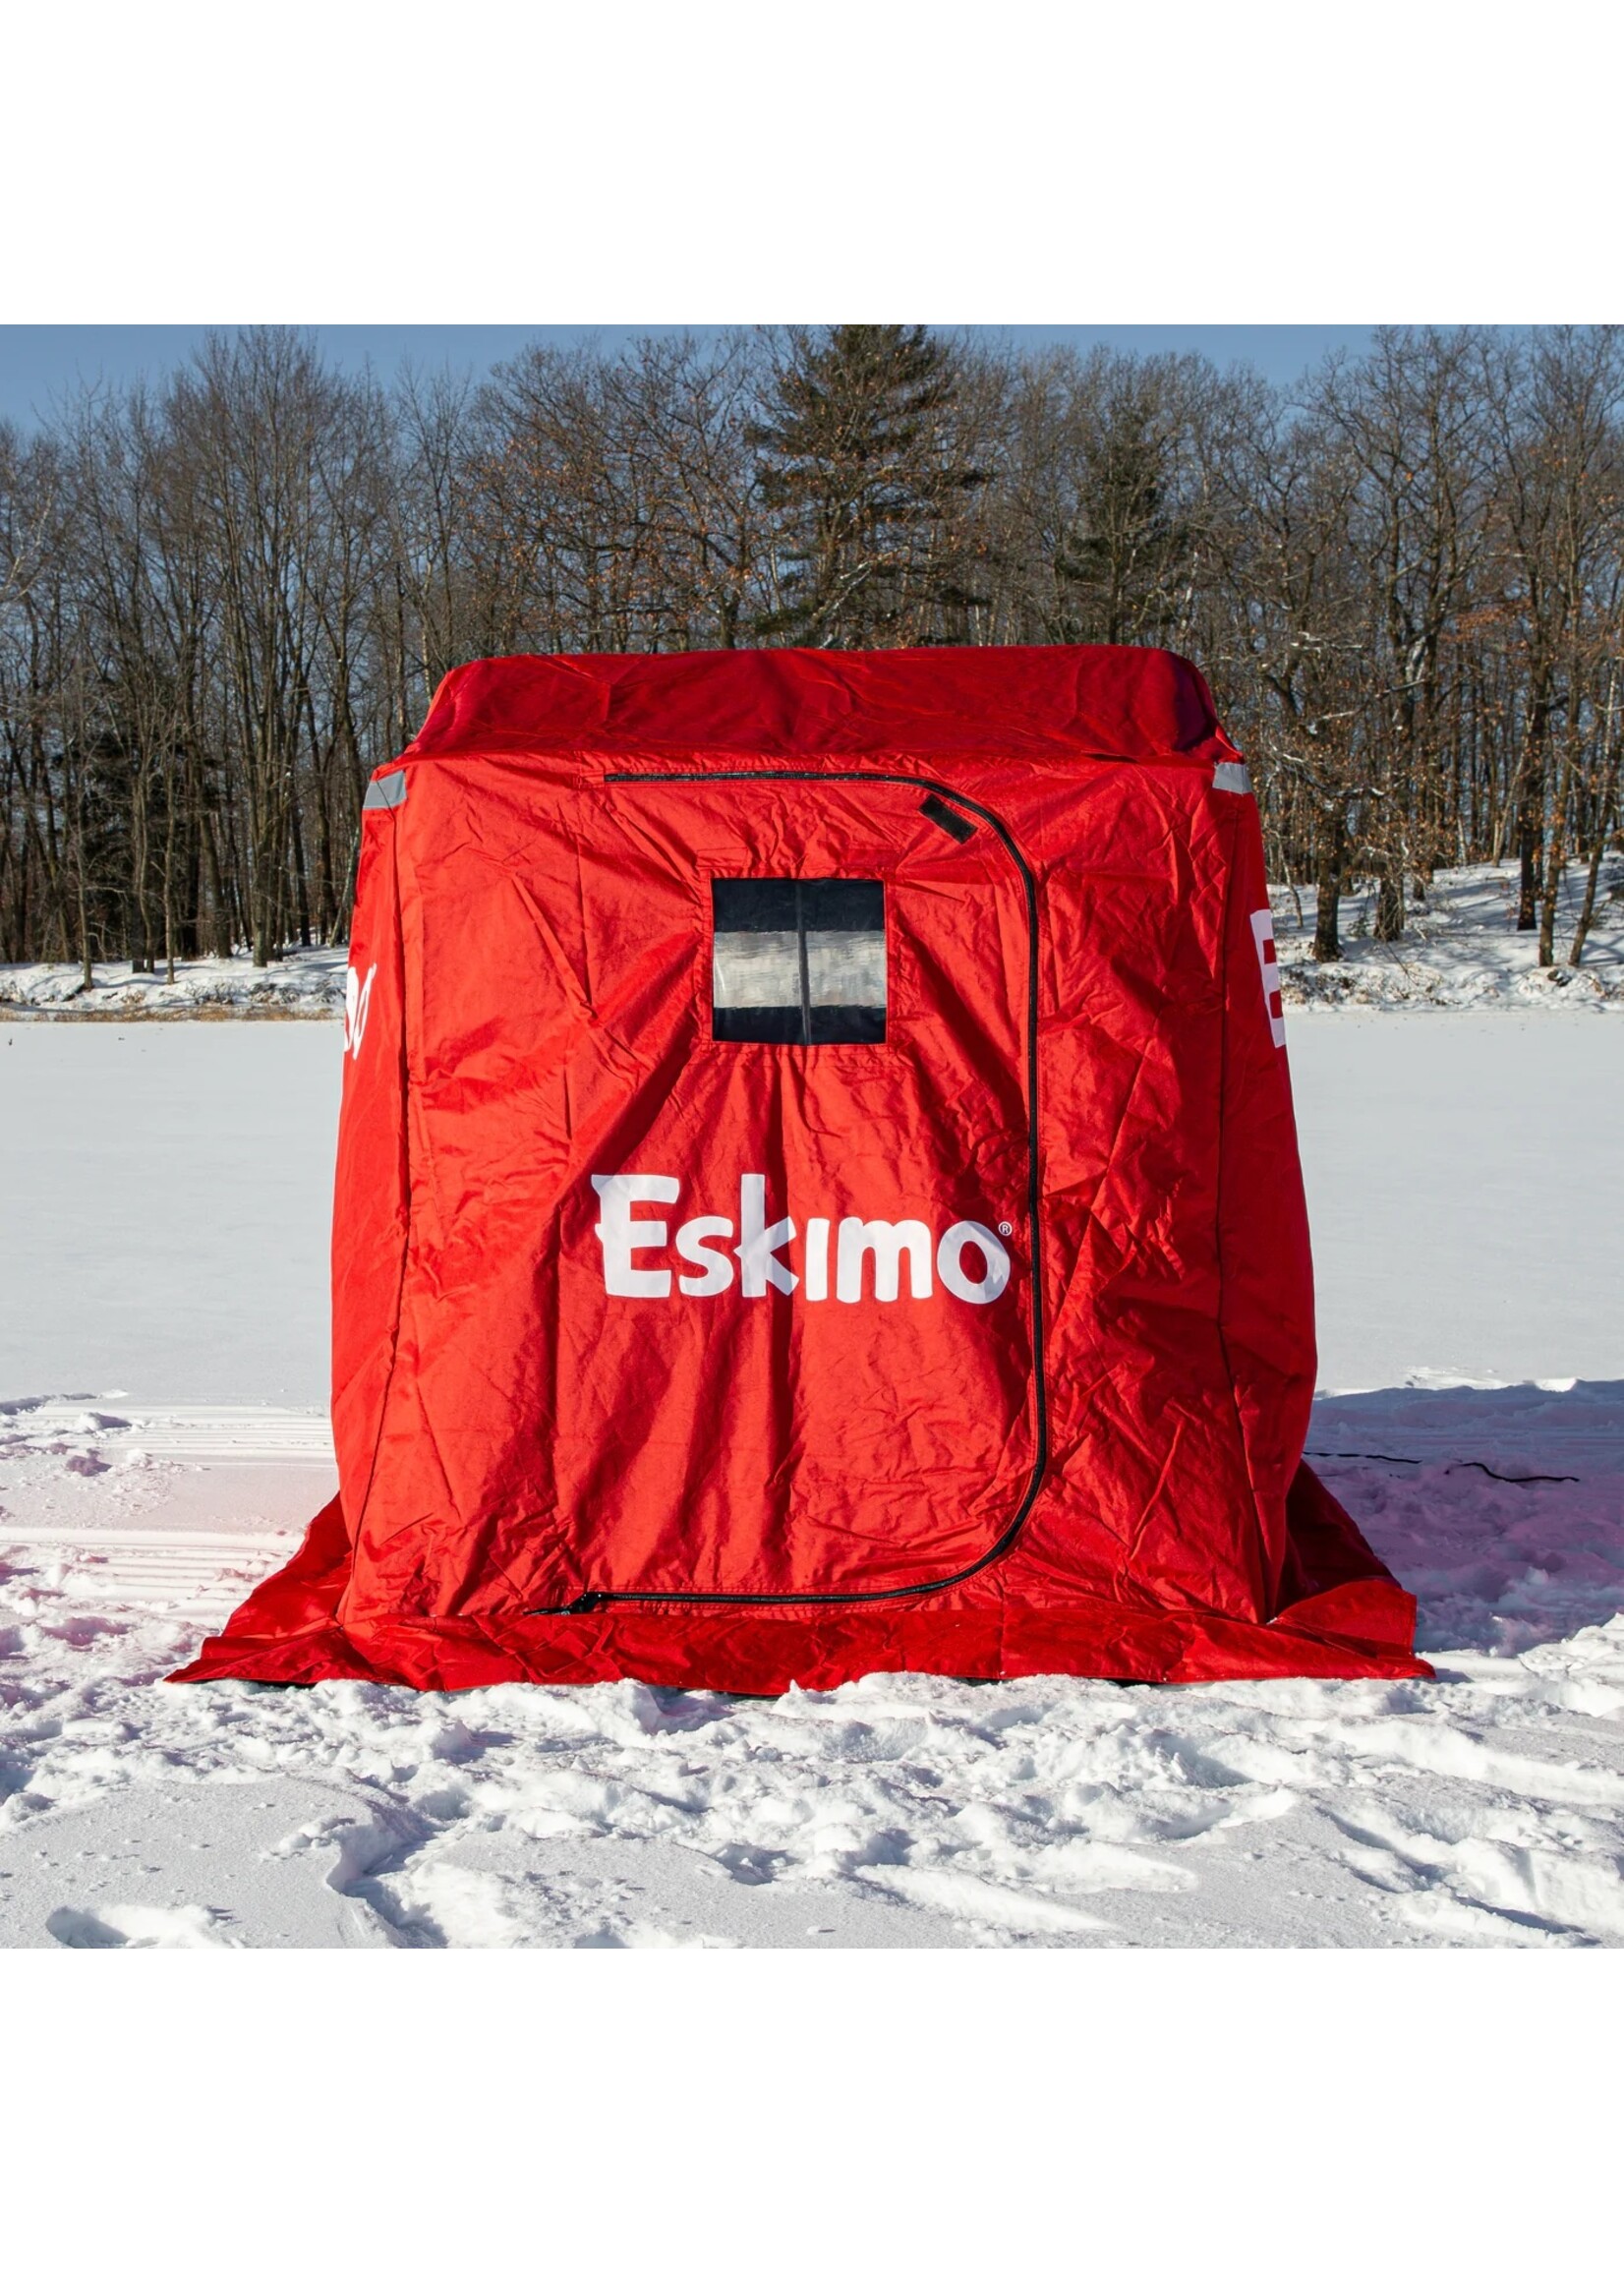 Eskimo Eskimo Sierra Lightweight 2man Flip Ice Shelter